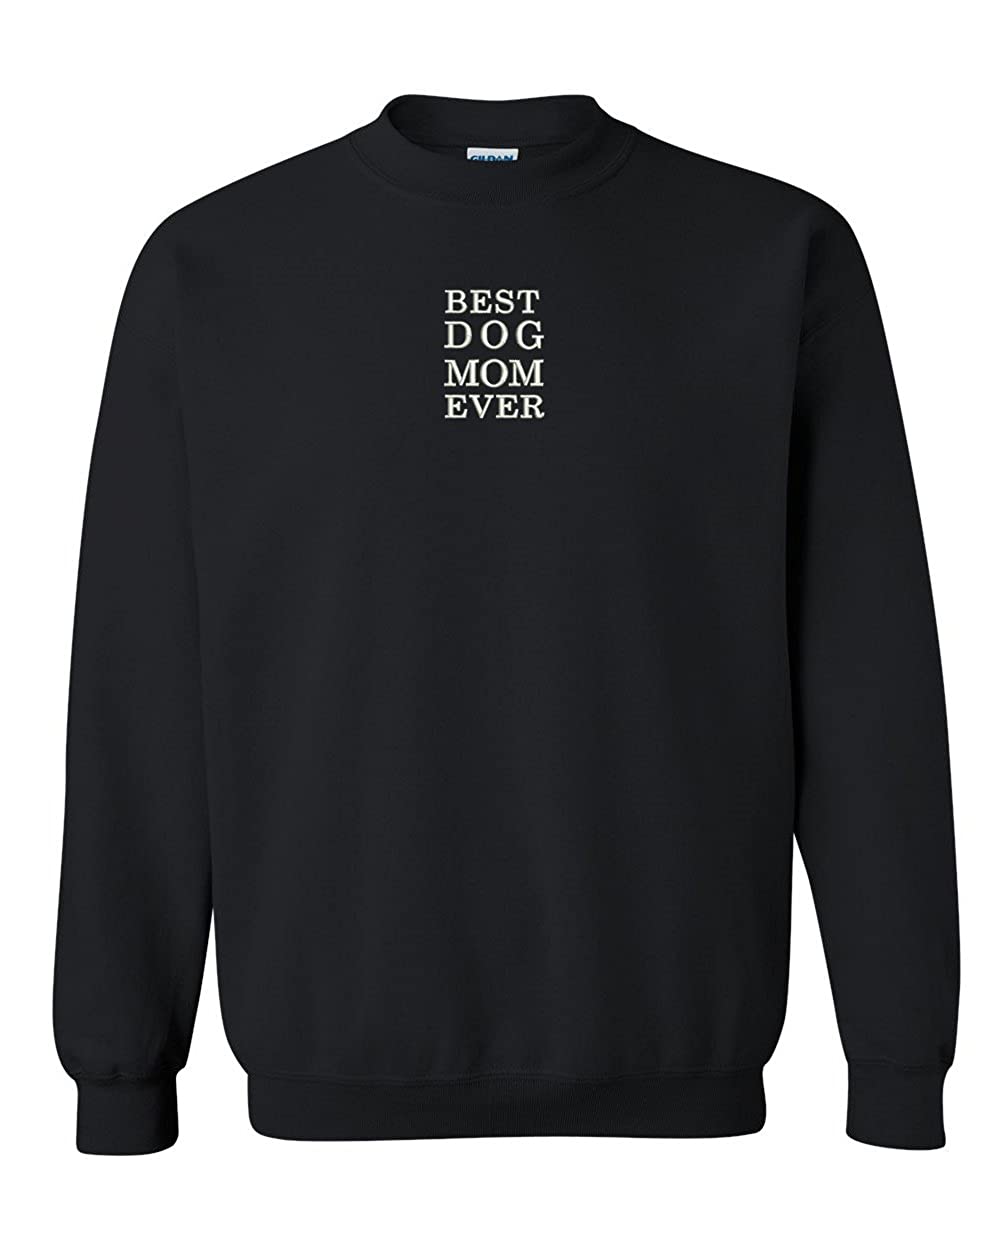 Trendy Apparel Shop Best Dog Mom Ever Embroidered Crewneck Sweatshirt - Black - XL